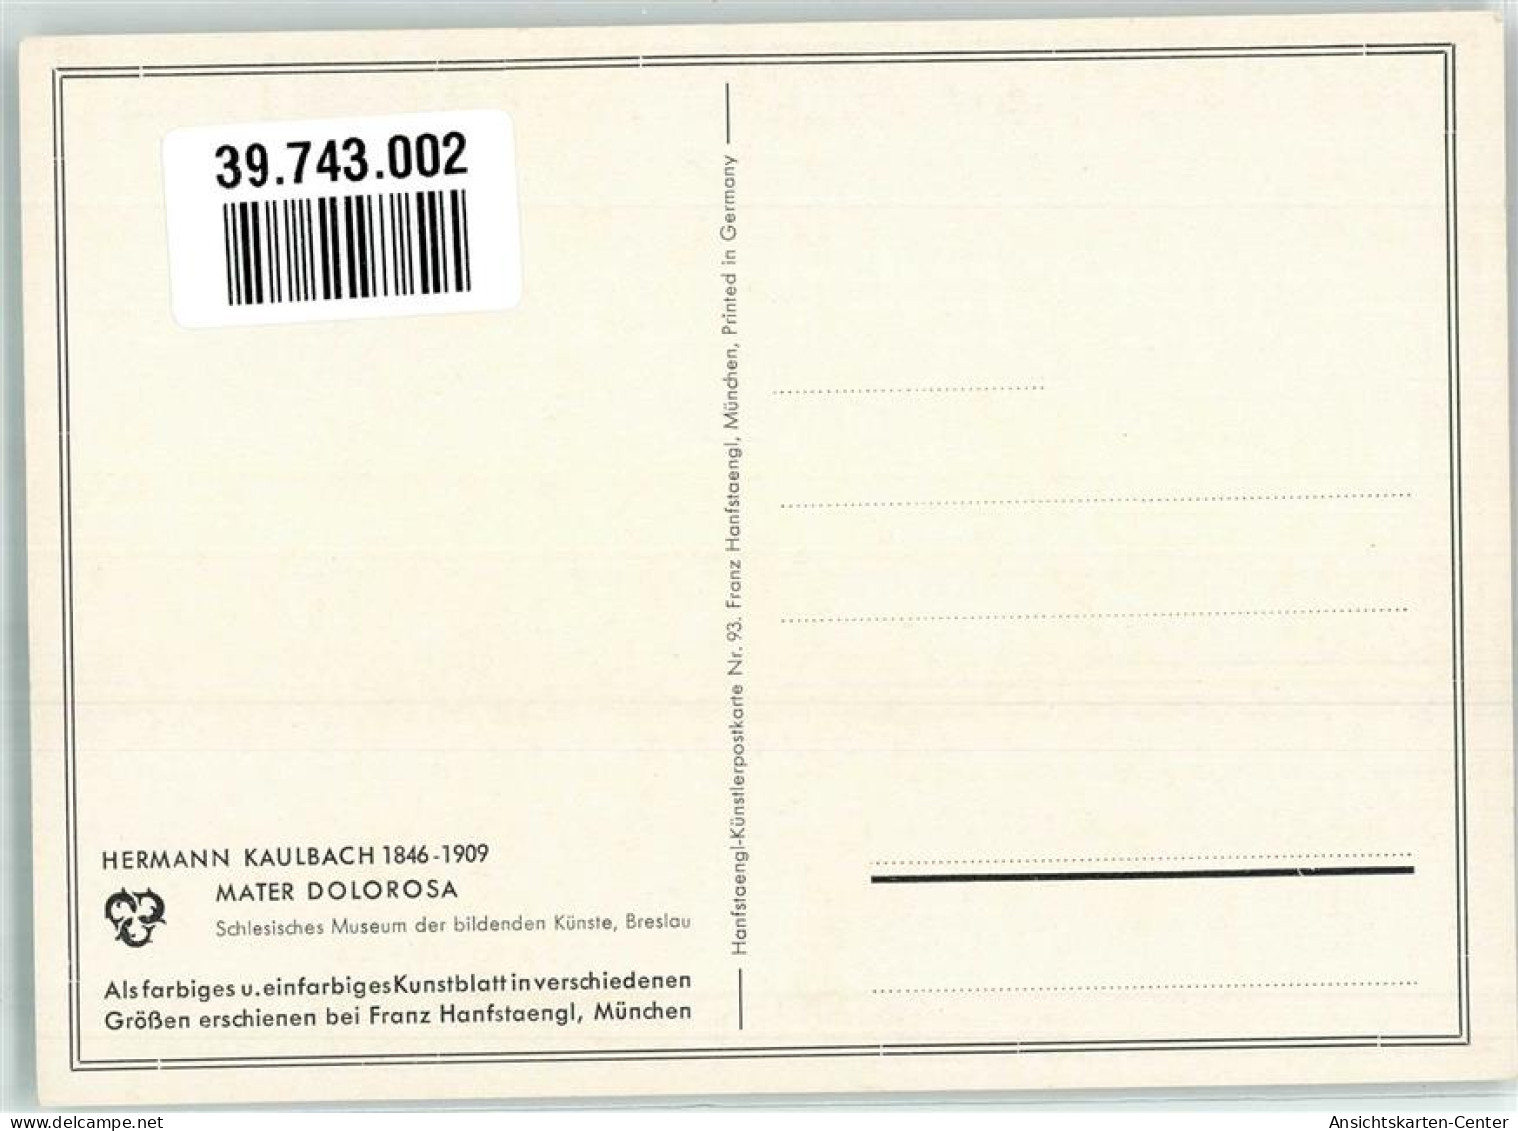 39743002 - Mater Dolorosa Verlag Hanfstaengl Nr.93 Baby - Kaulbach, Hermann